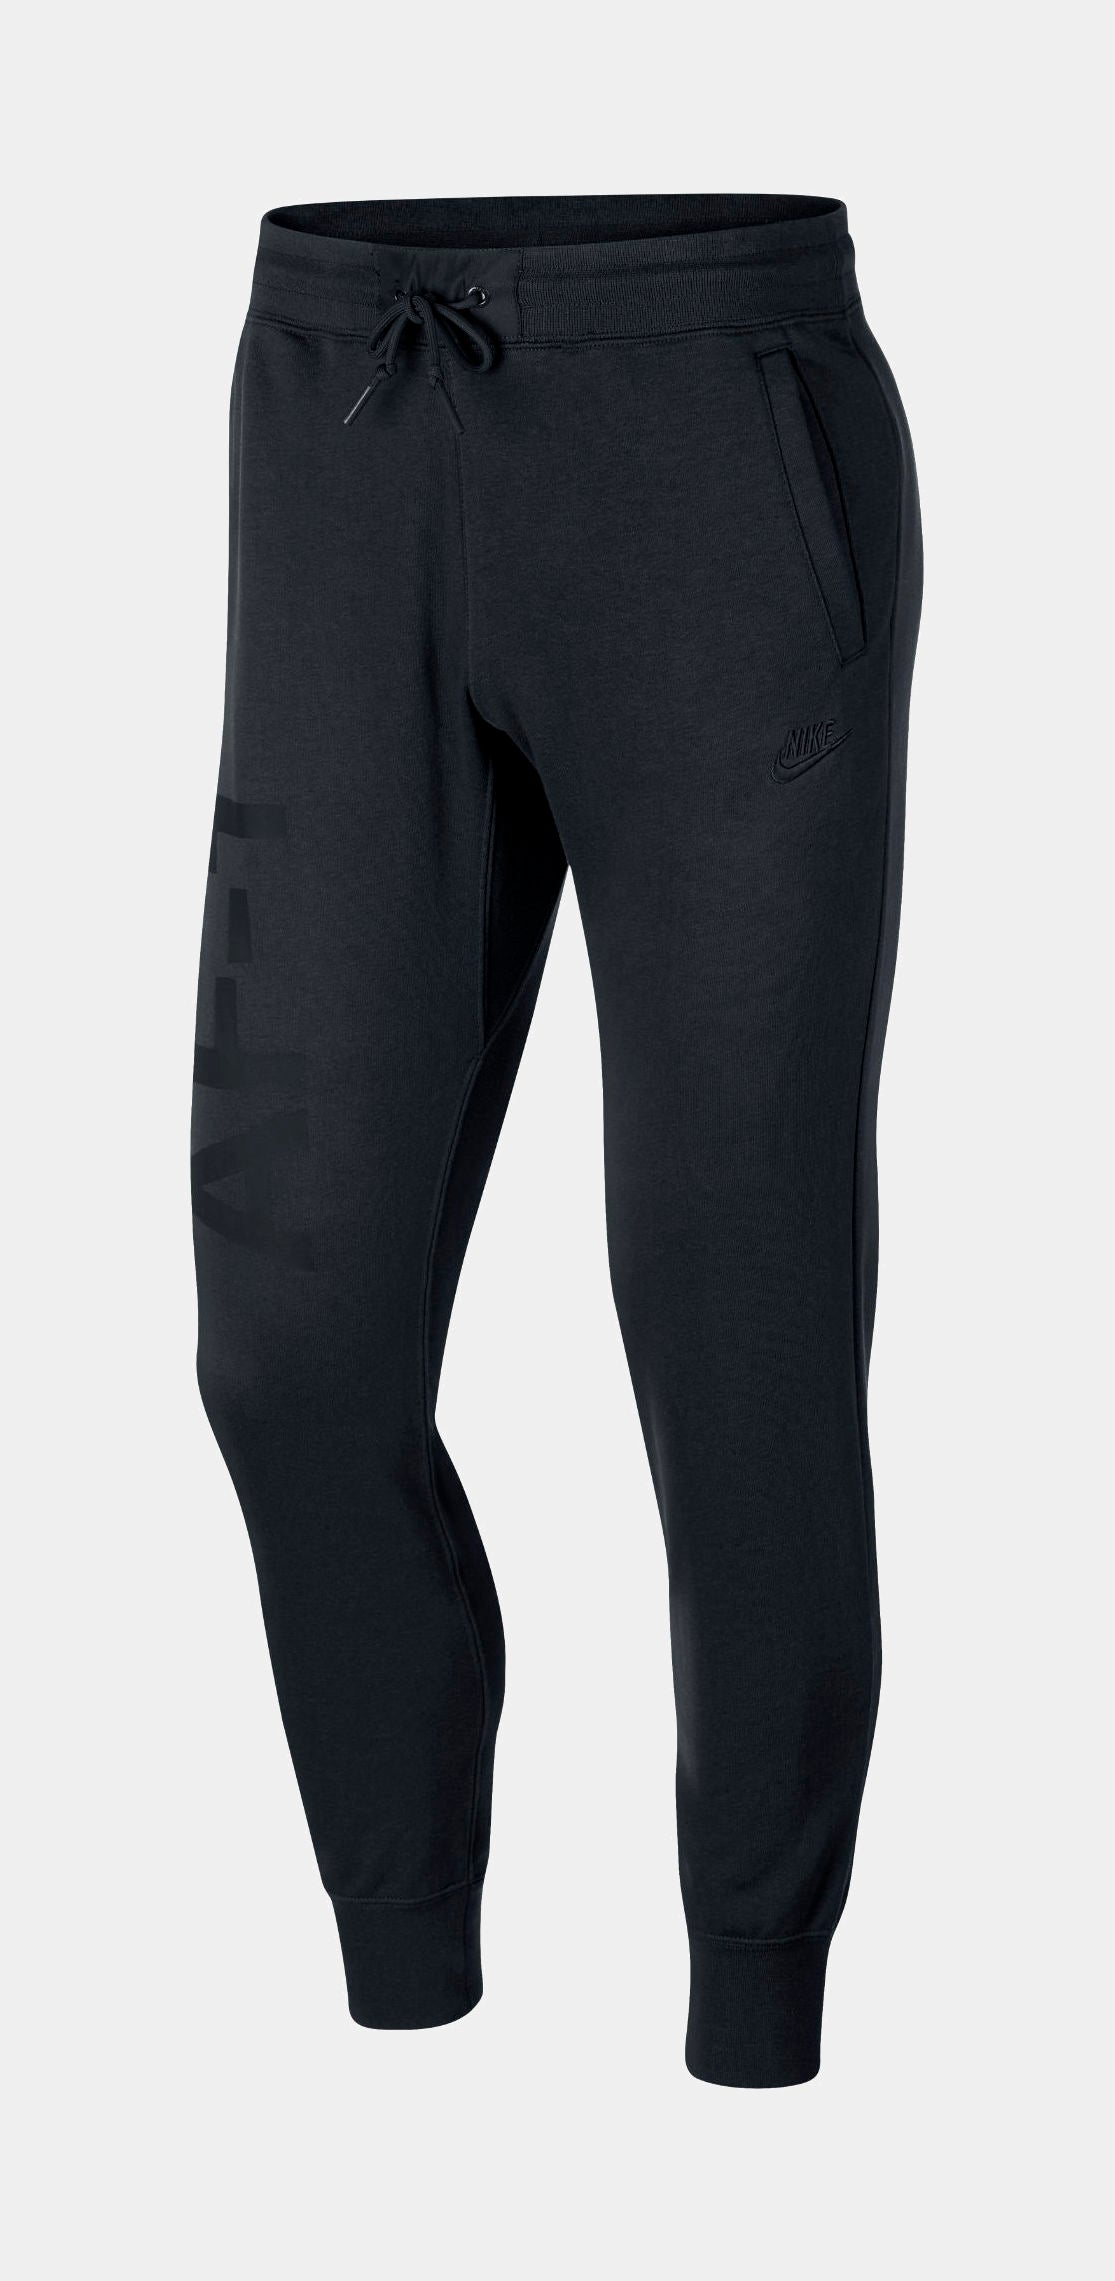 The Air Force 1 Tech Fleece Mens Jogger Pants (Black) Nike website is ...